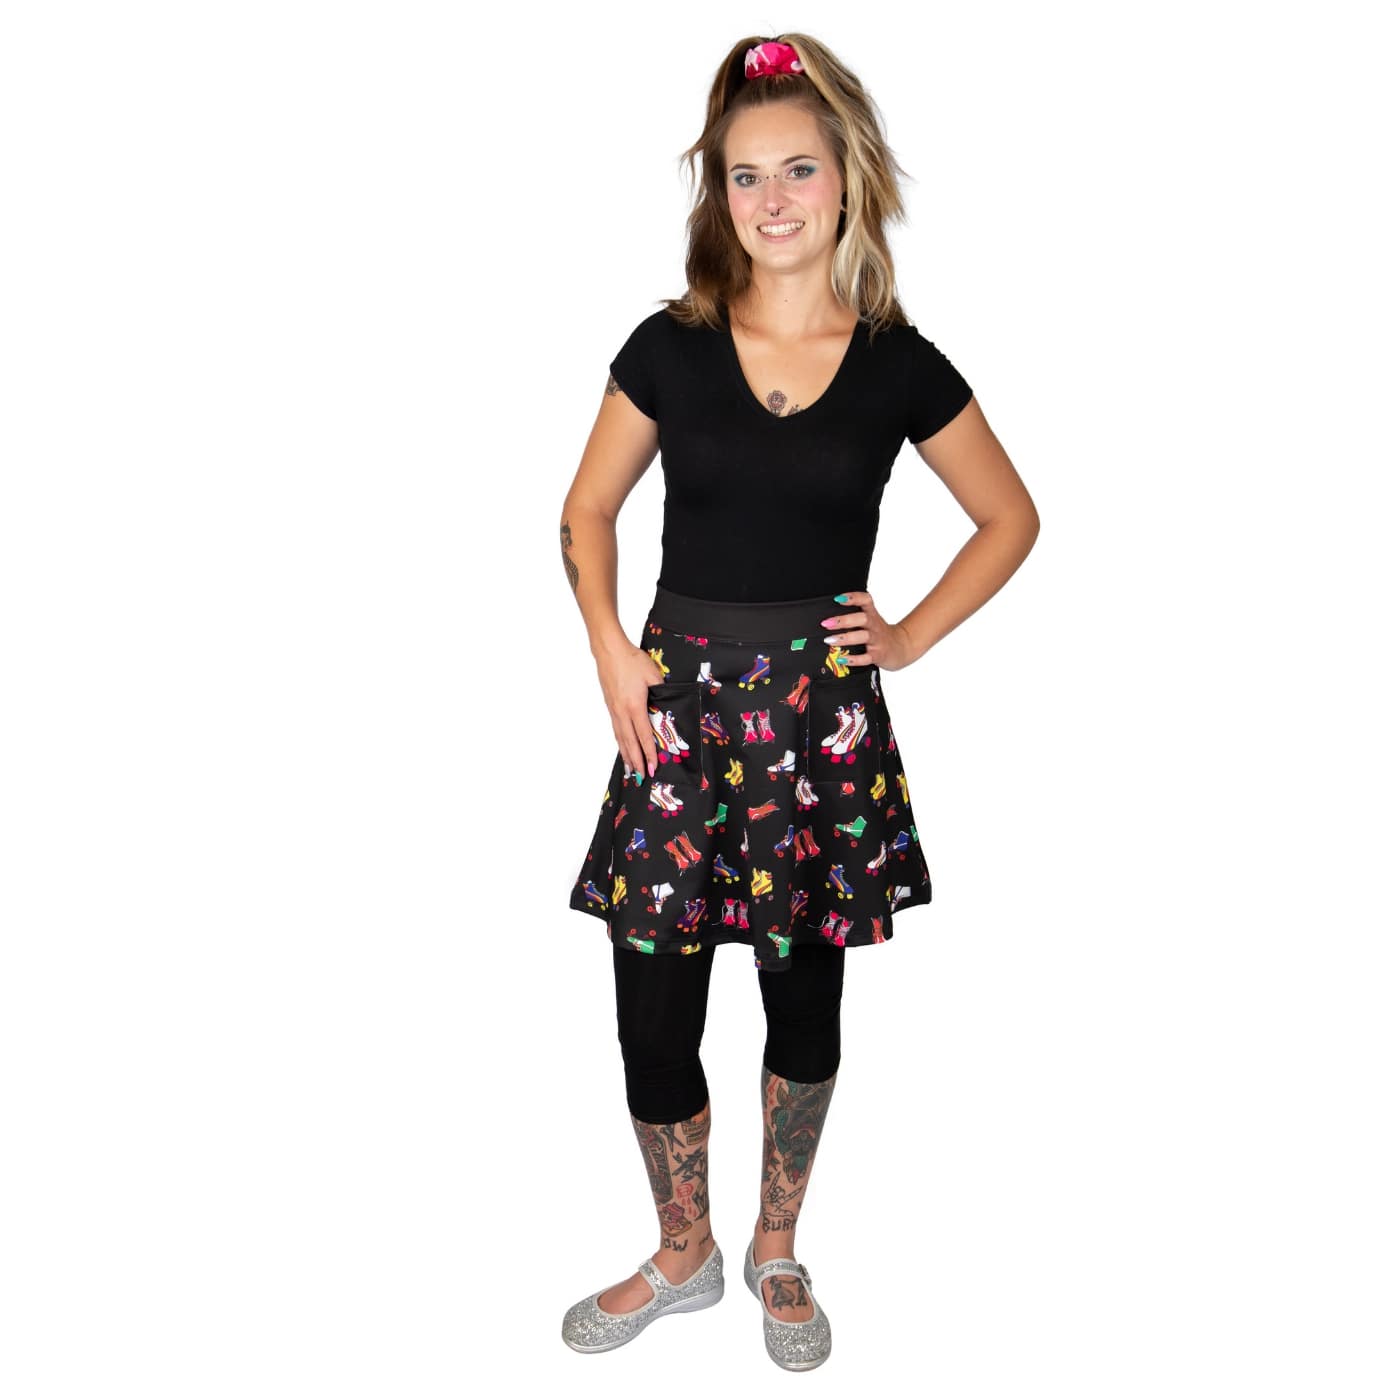 Retro Skates Short Skirt by RainbowsAndFairies.com.au (Rollerskates - Roller Derby - Skating - Kitsch - Aline Skirt With Pockets - Vintage Inspired) - SKU: CL_SHORT_RETRO_ORG - Pic-03